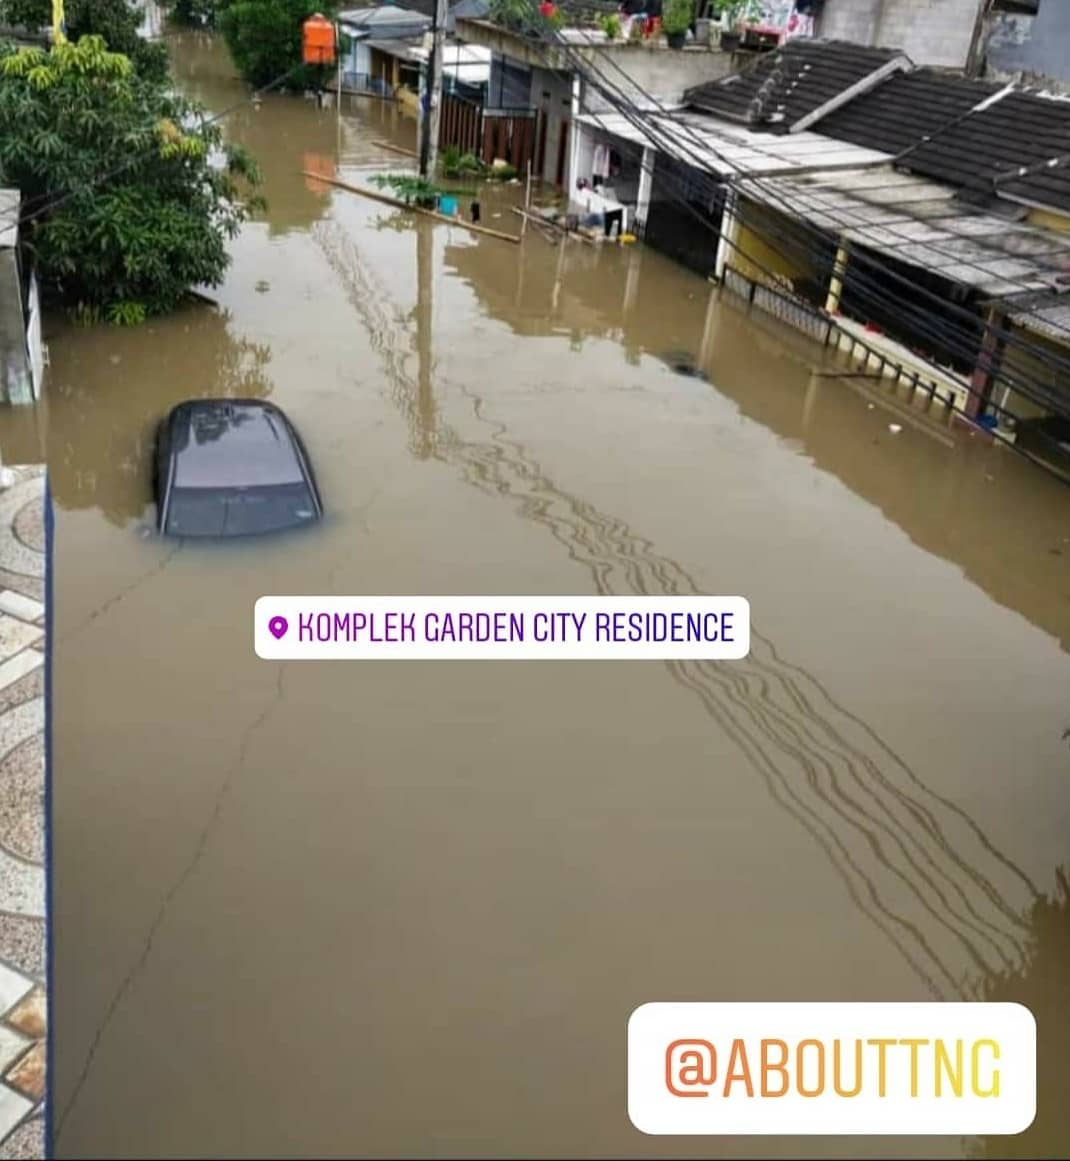 About Tangerang On Twitter Hujan Deras Yang Mengguyur Kawasan Tangerang Mengakibatkan Ratusan Rumah Di Perumahan Garden City Dan Total Persada Kecamatan Periuk Kota Tangerang Terendam Banjir Https T Co Ixwnhe6ka2